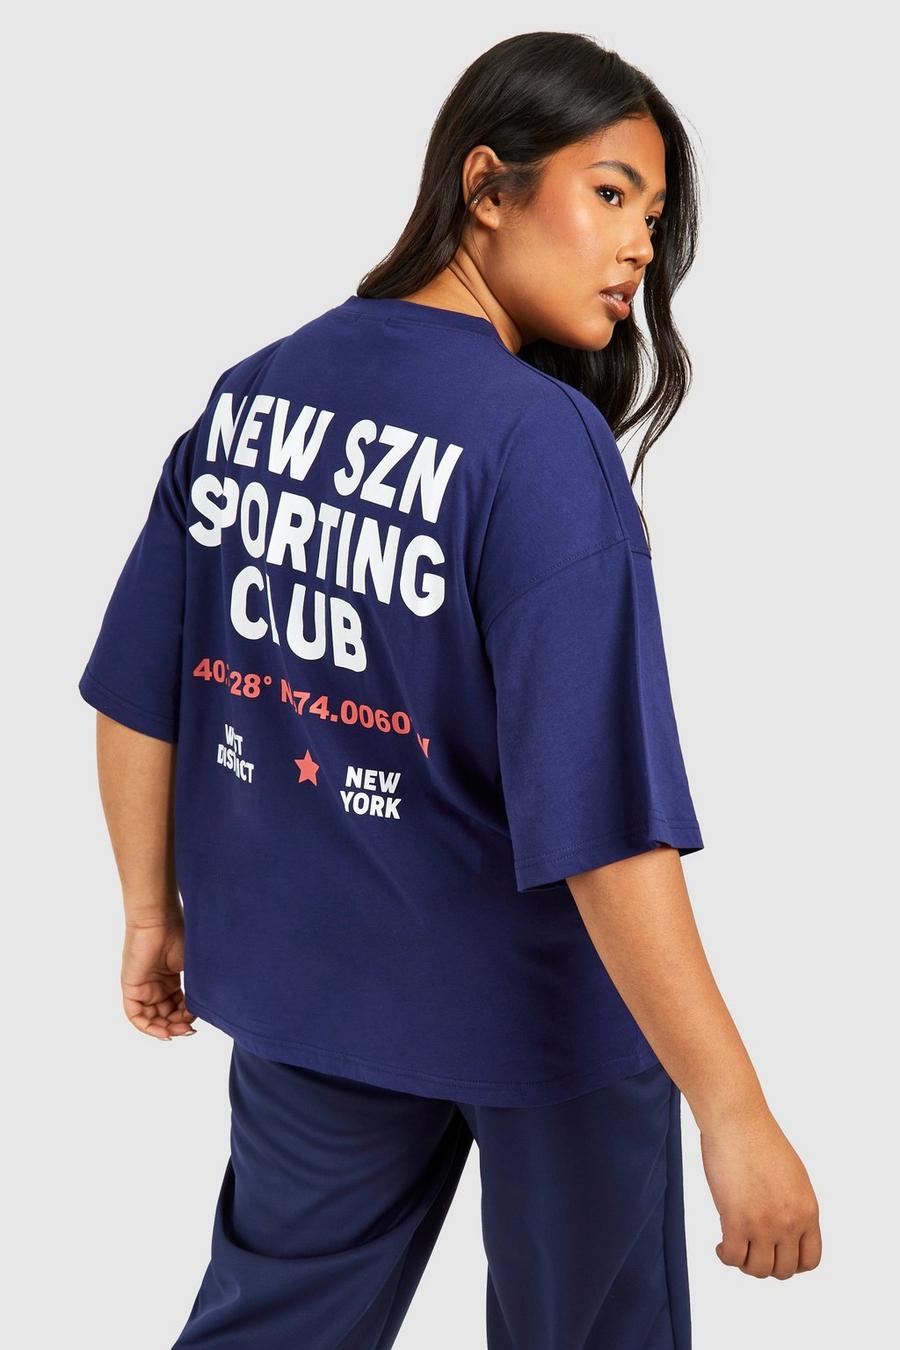 T-shirt Plus Size oversize New Szn Sports Club, Navy